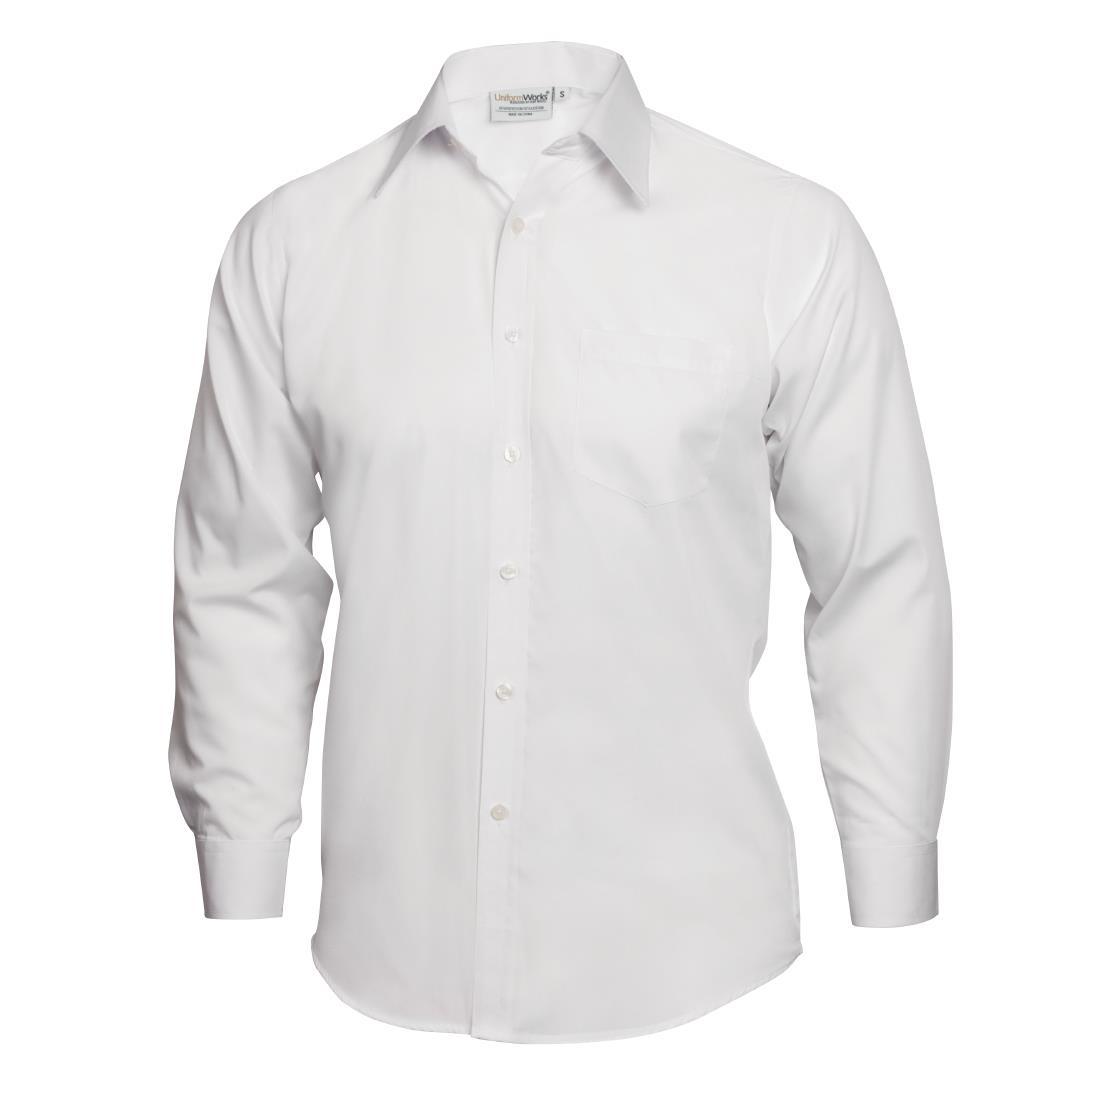 Uniform Works Long Sleeve Shirt White Size 3XL - A730-3XL  - 2